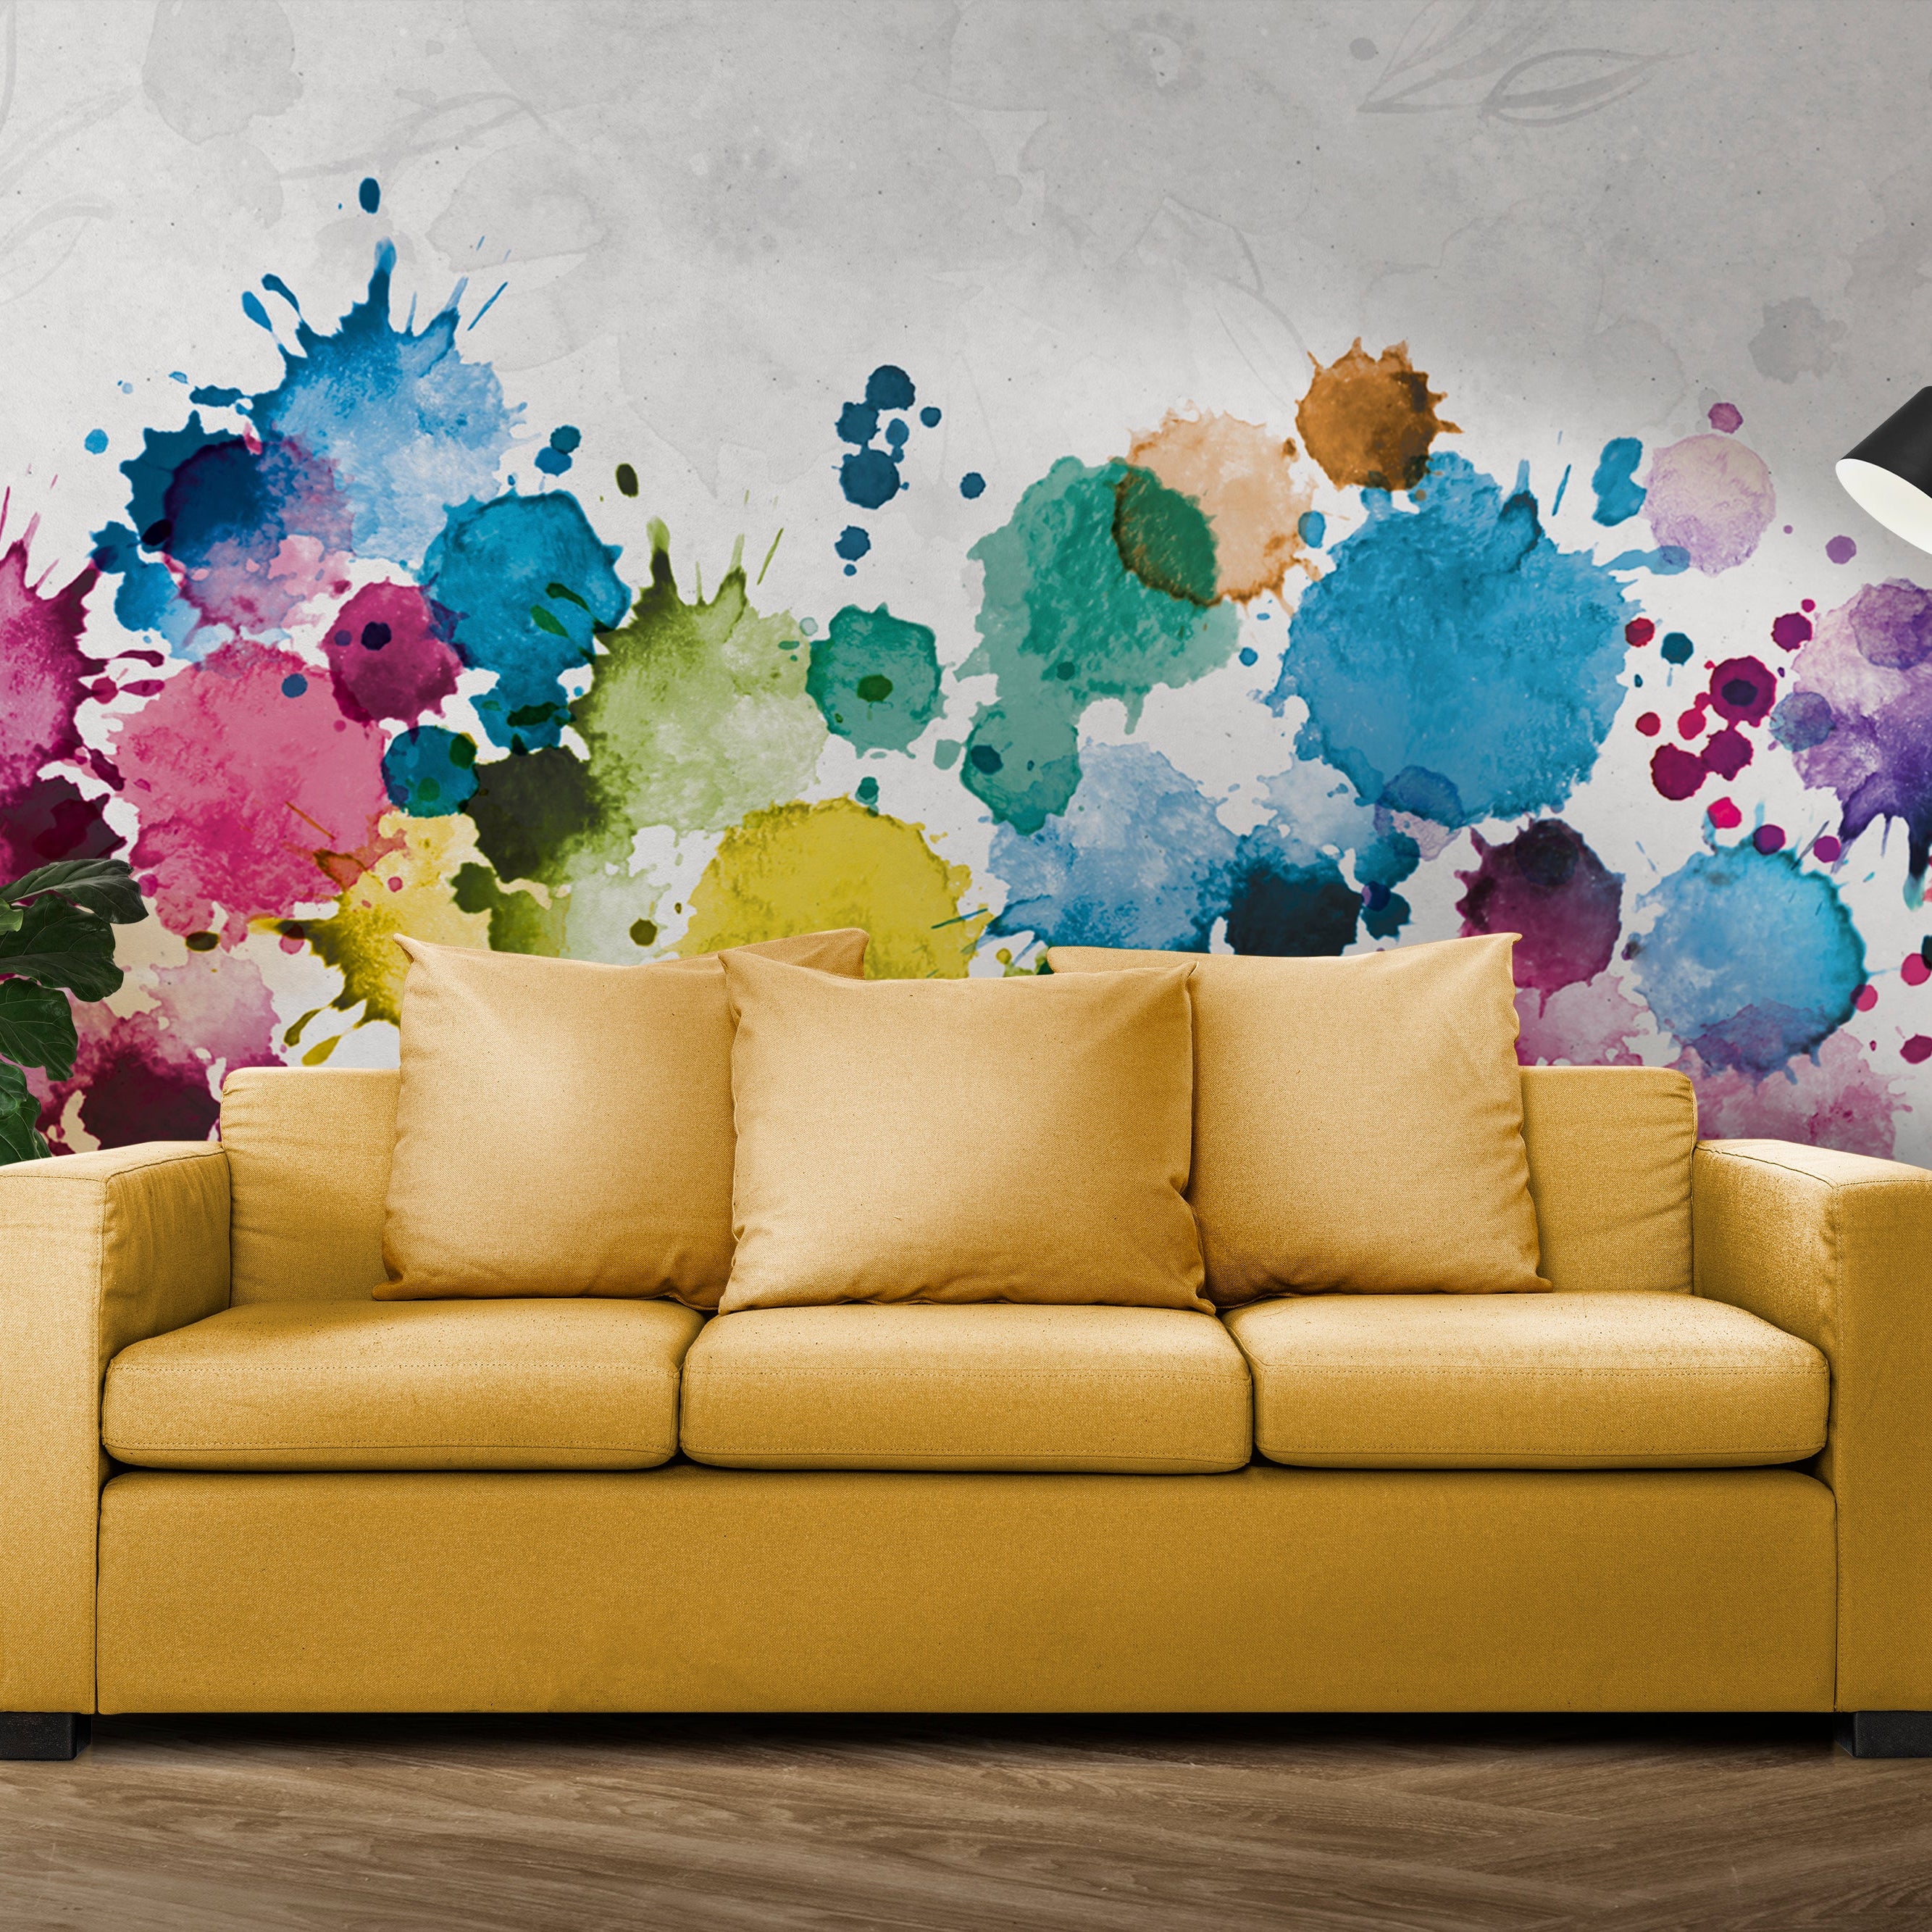 Paint it Wallpaper Mural: Enhance Your Space